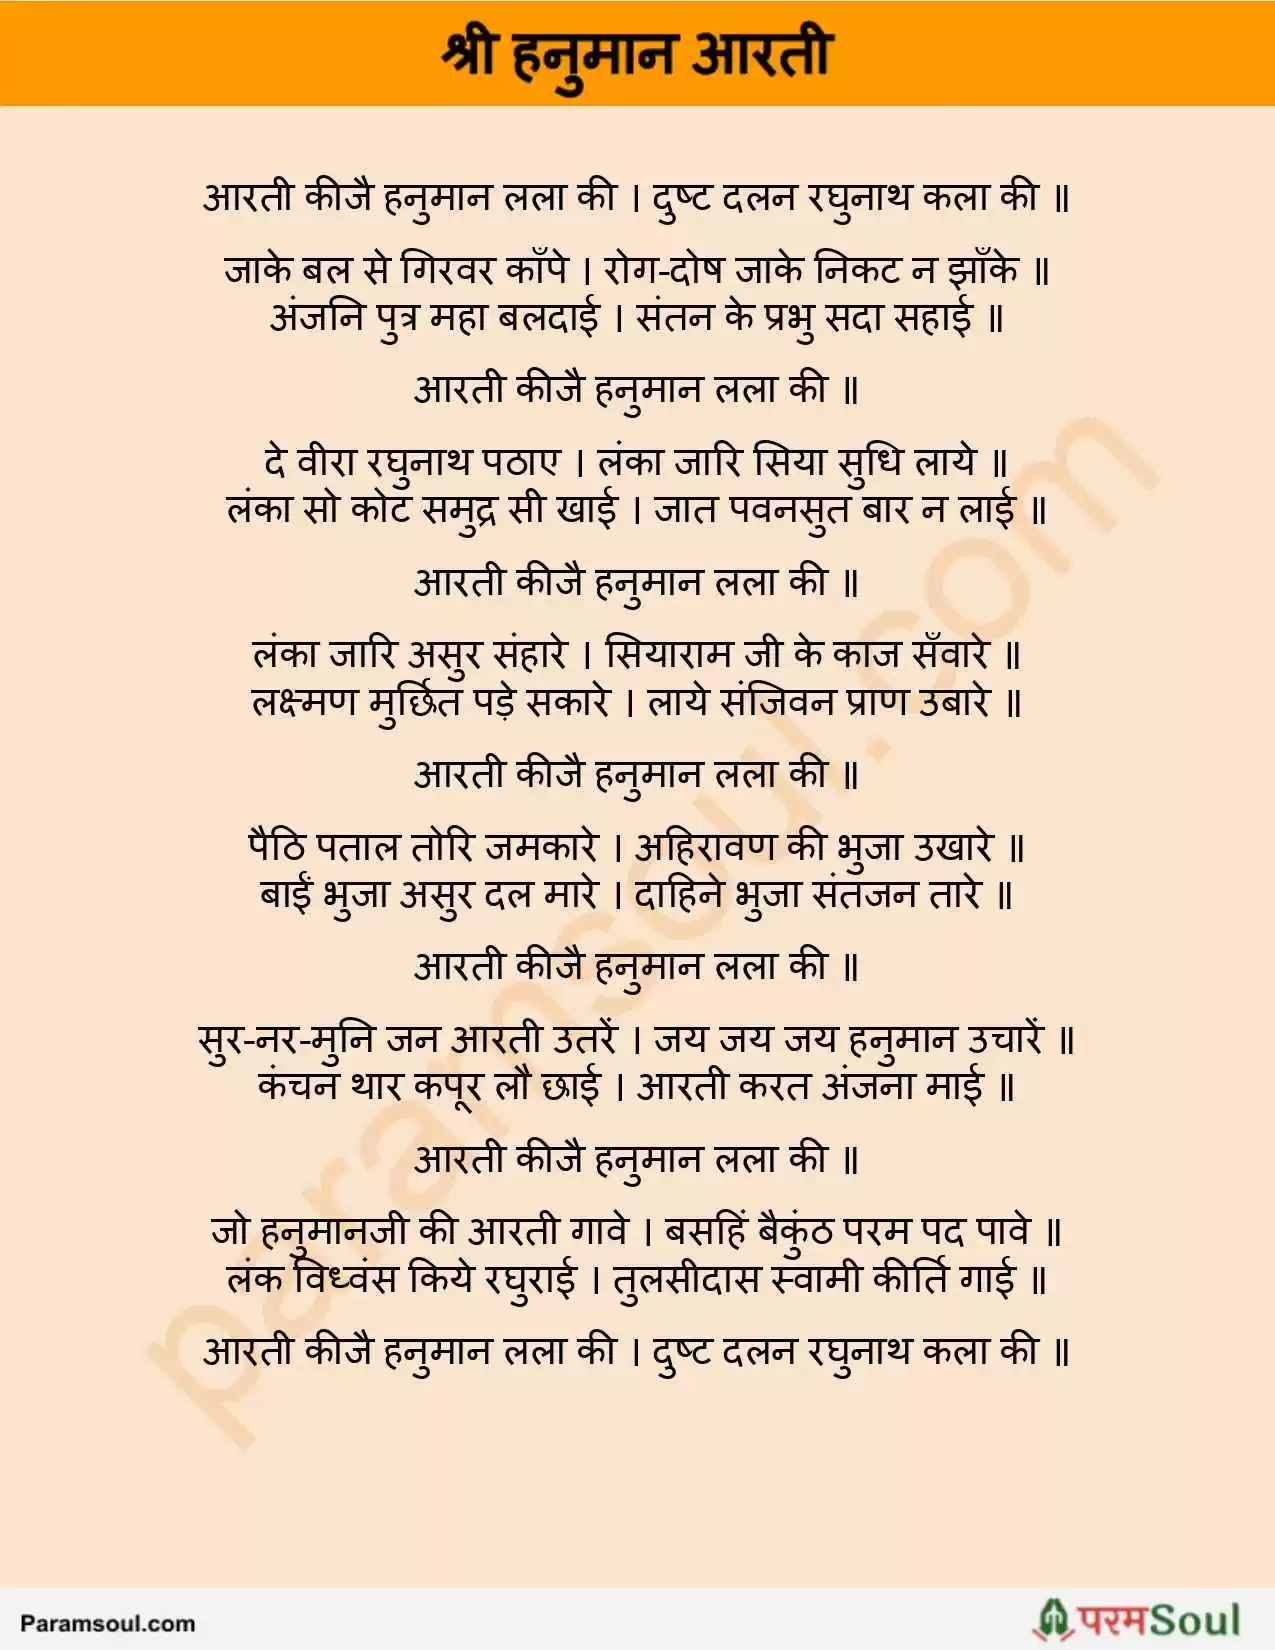 Hanuman ji ki Aarti Lyrics